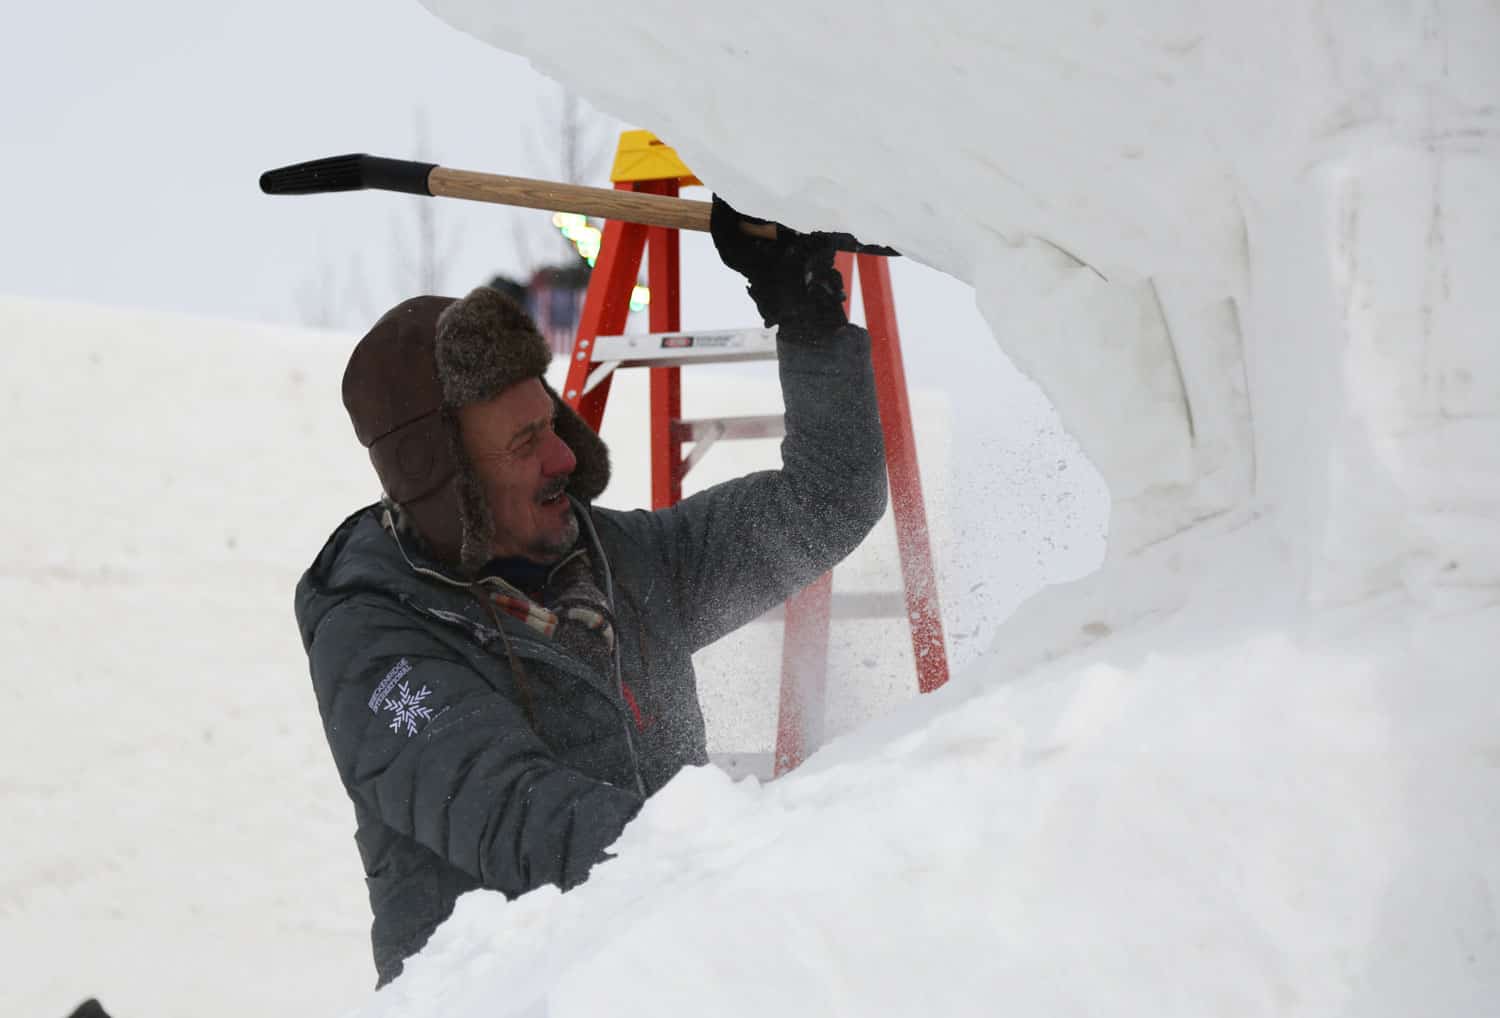 Man carving snow sculpture in Breckenridge